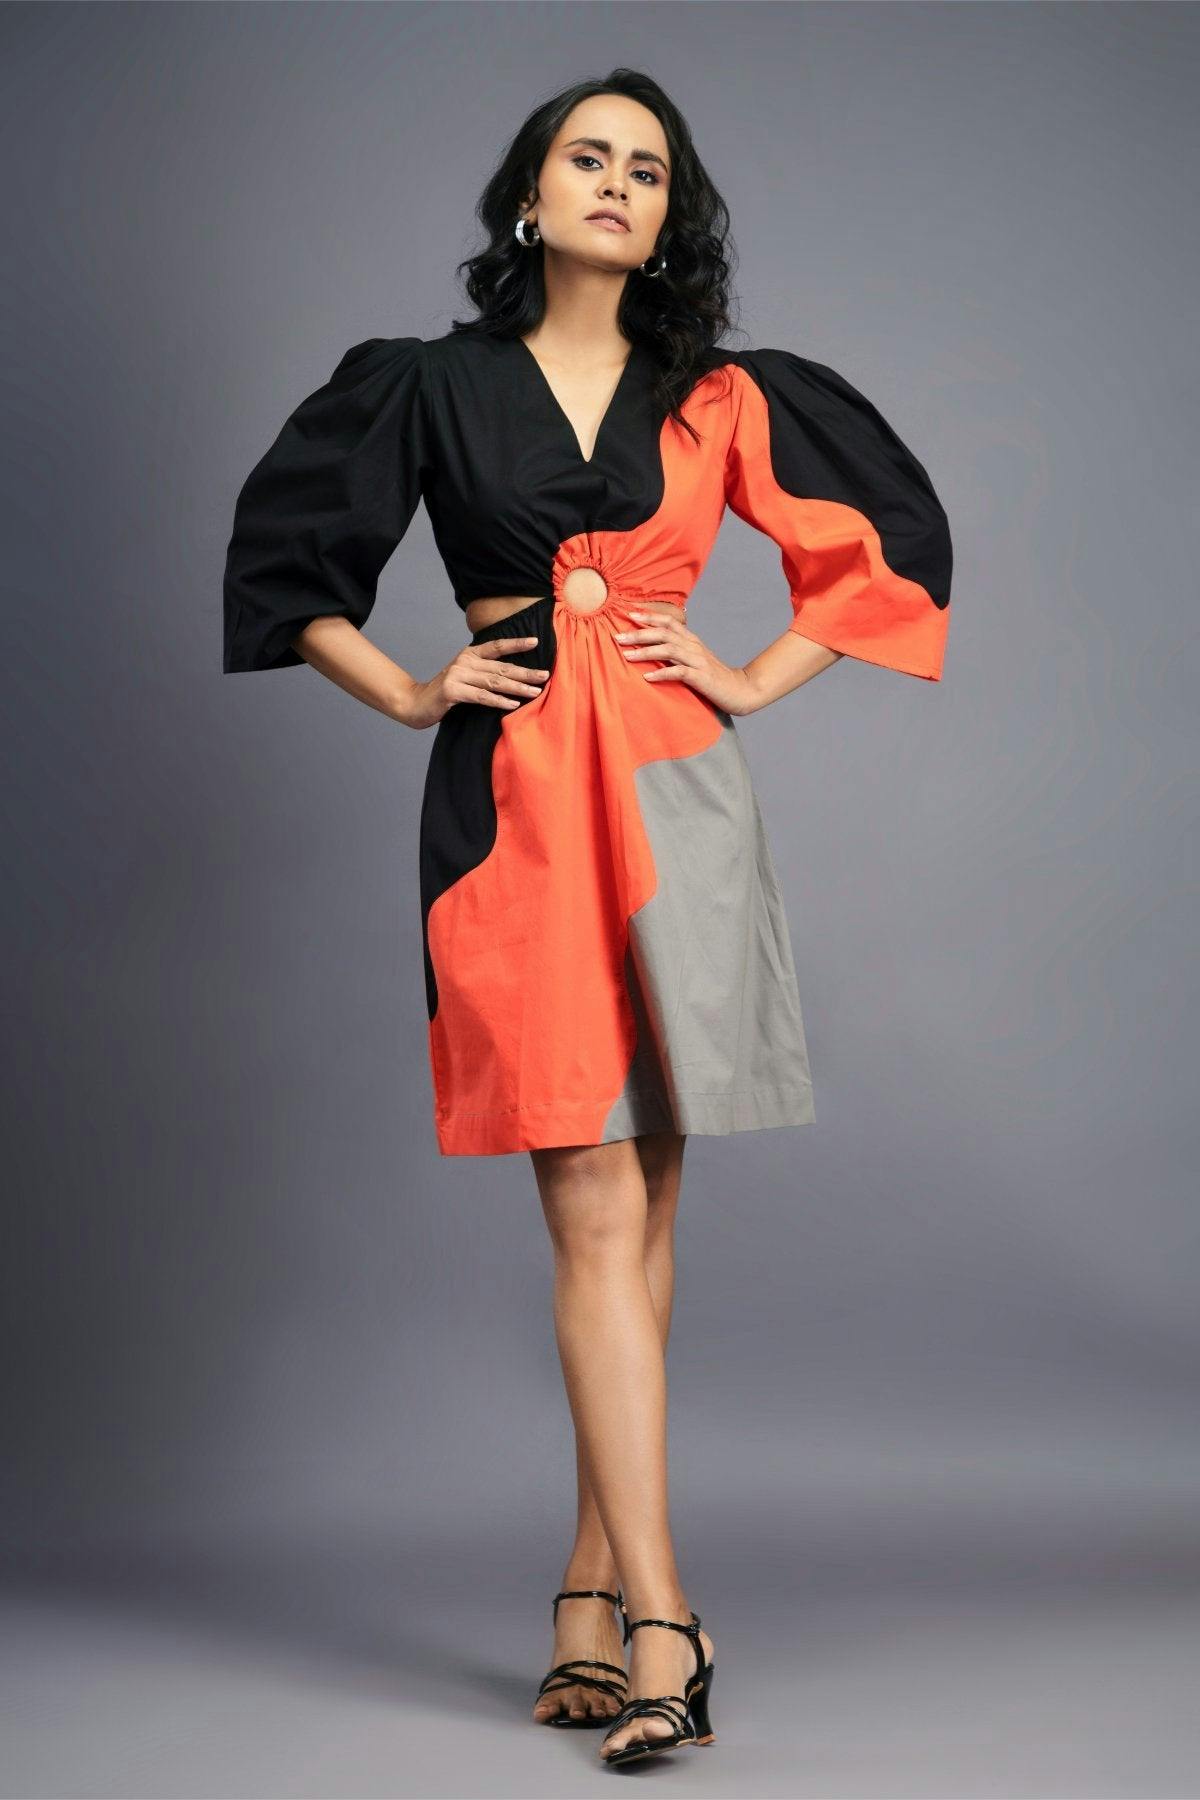 Thumbnail preview #0 for BB-1106-OG - Black Orange Cutout Dress